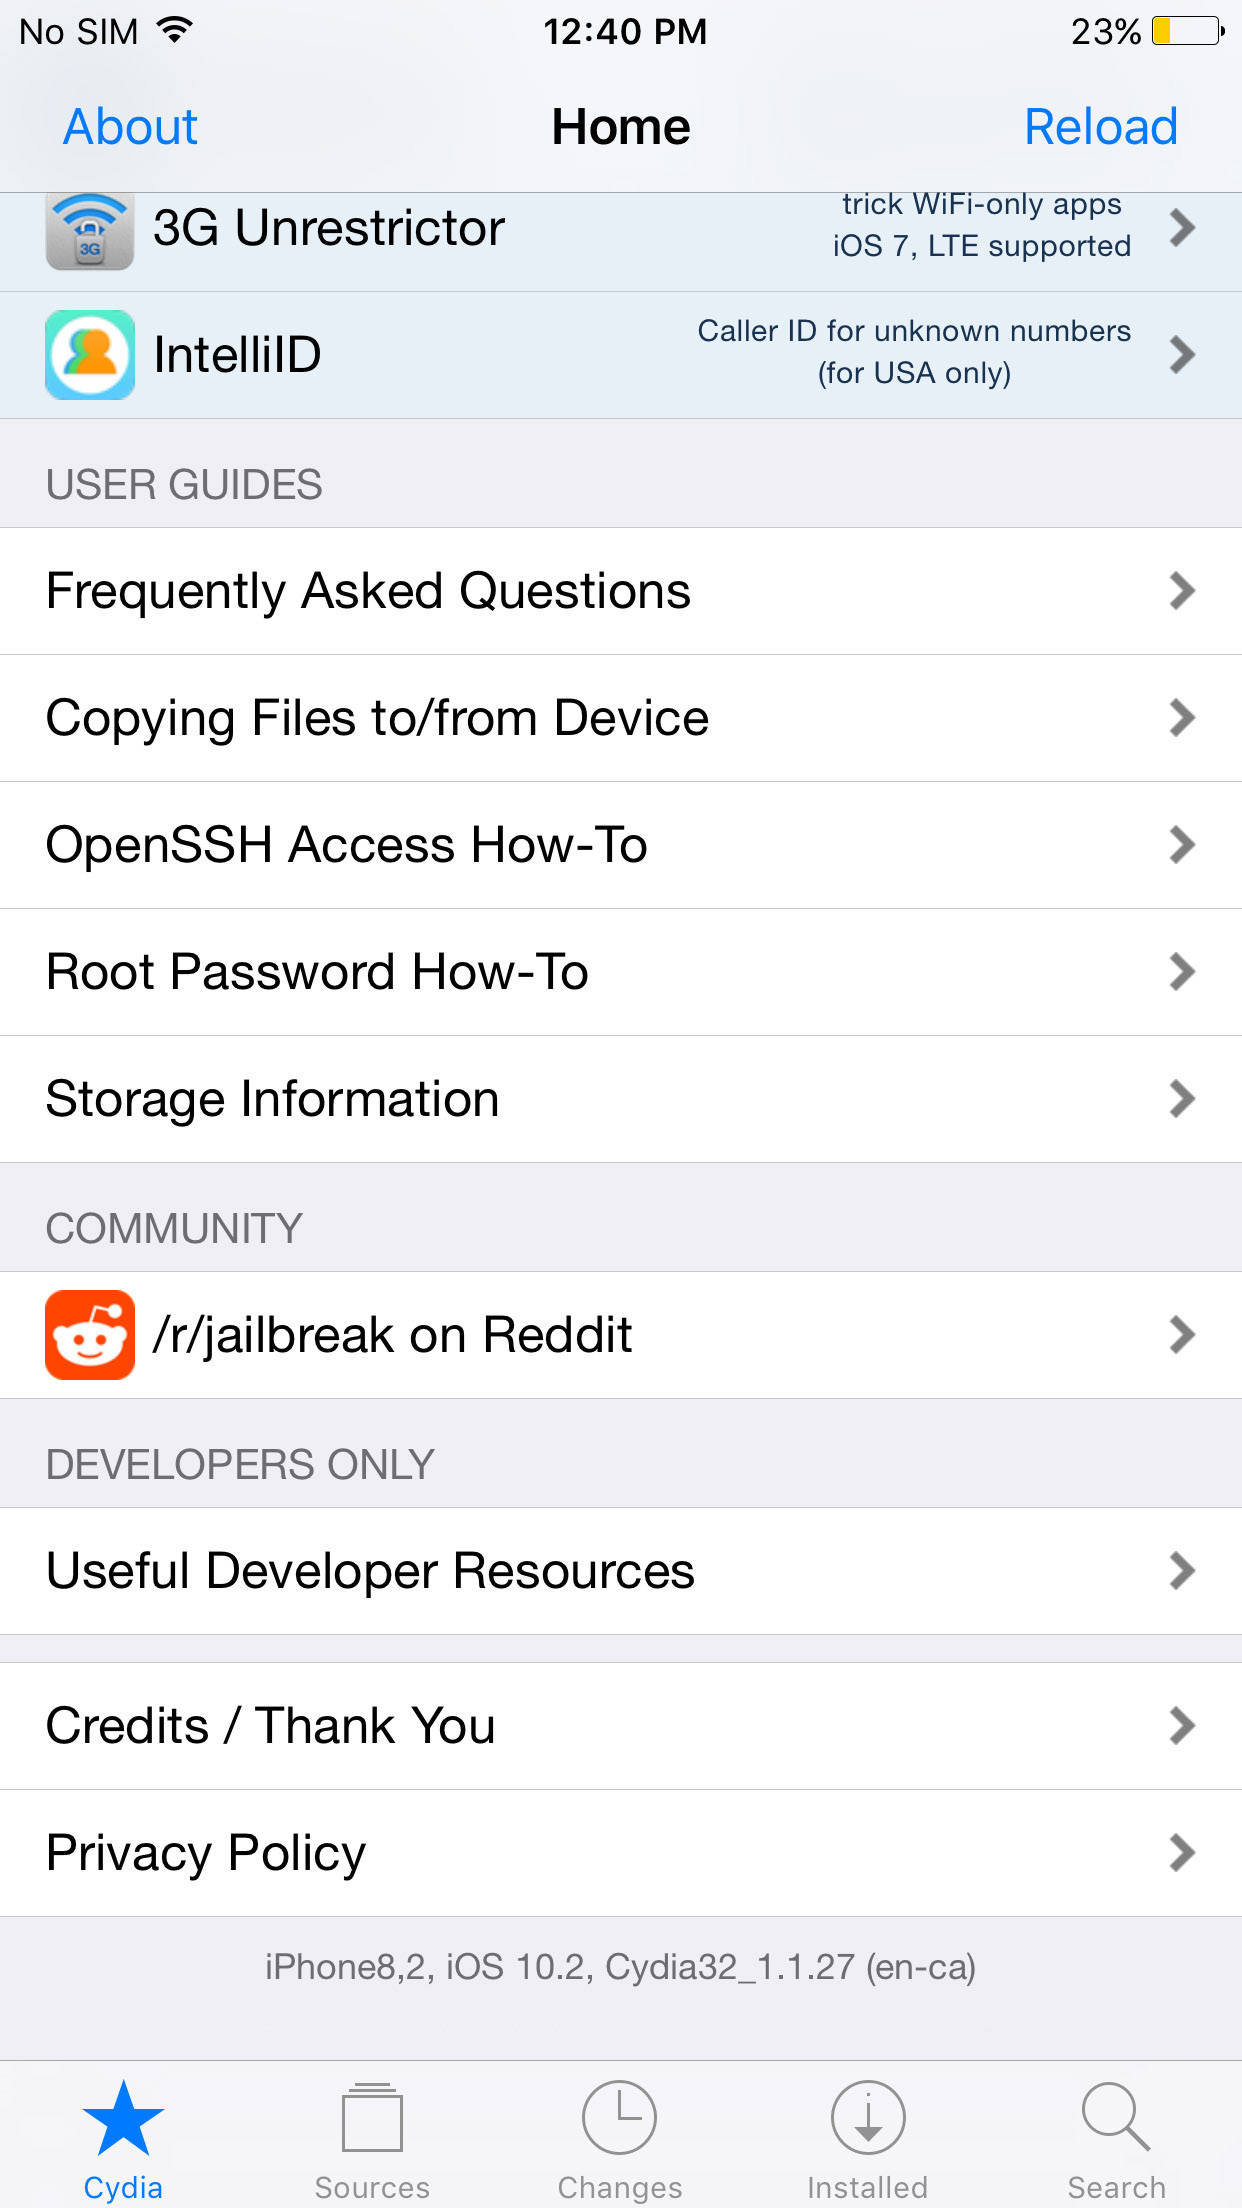 How to Jailbreak Your iPhone on iOS 10.2 Using Yalu and Cydia Impactor (Mac)